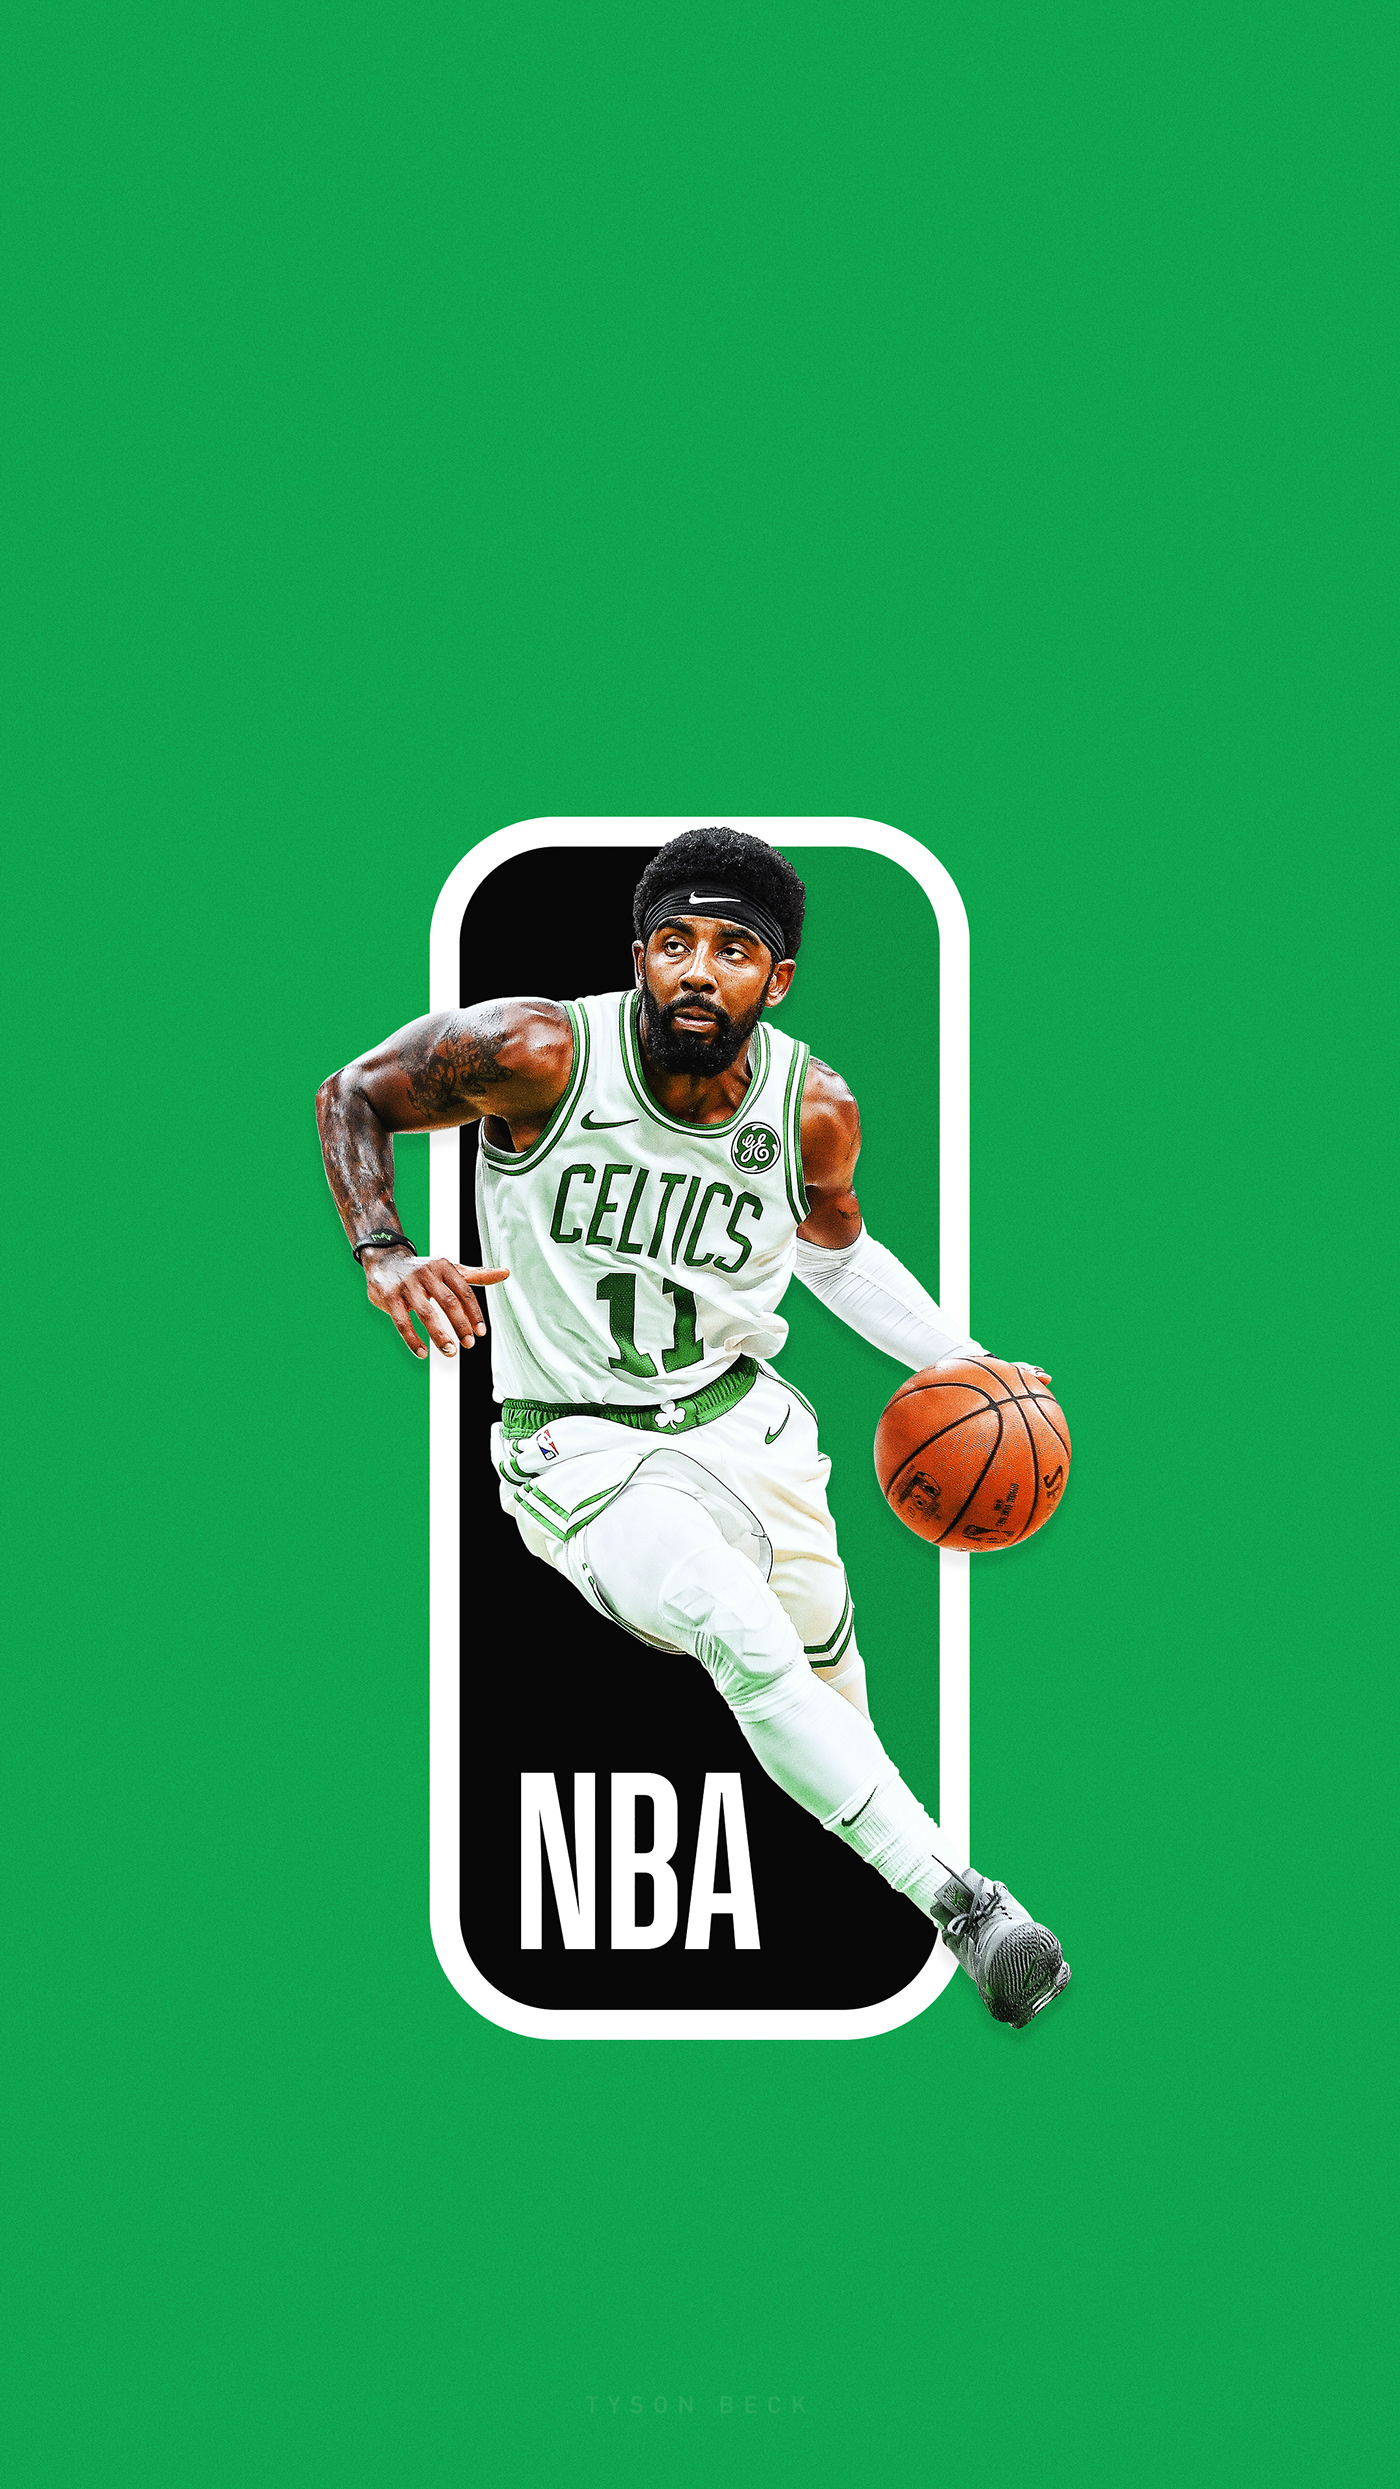 The Next NBA logo? NBA Logoman Series on Behance